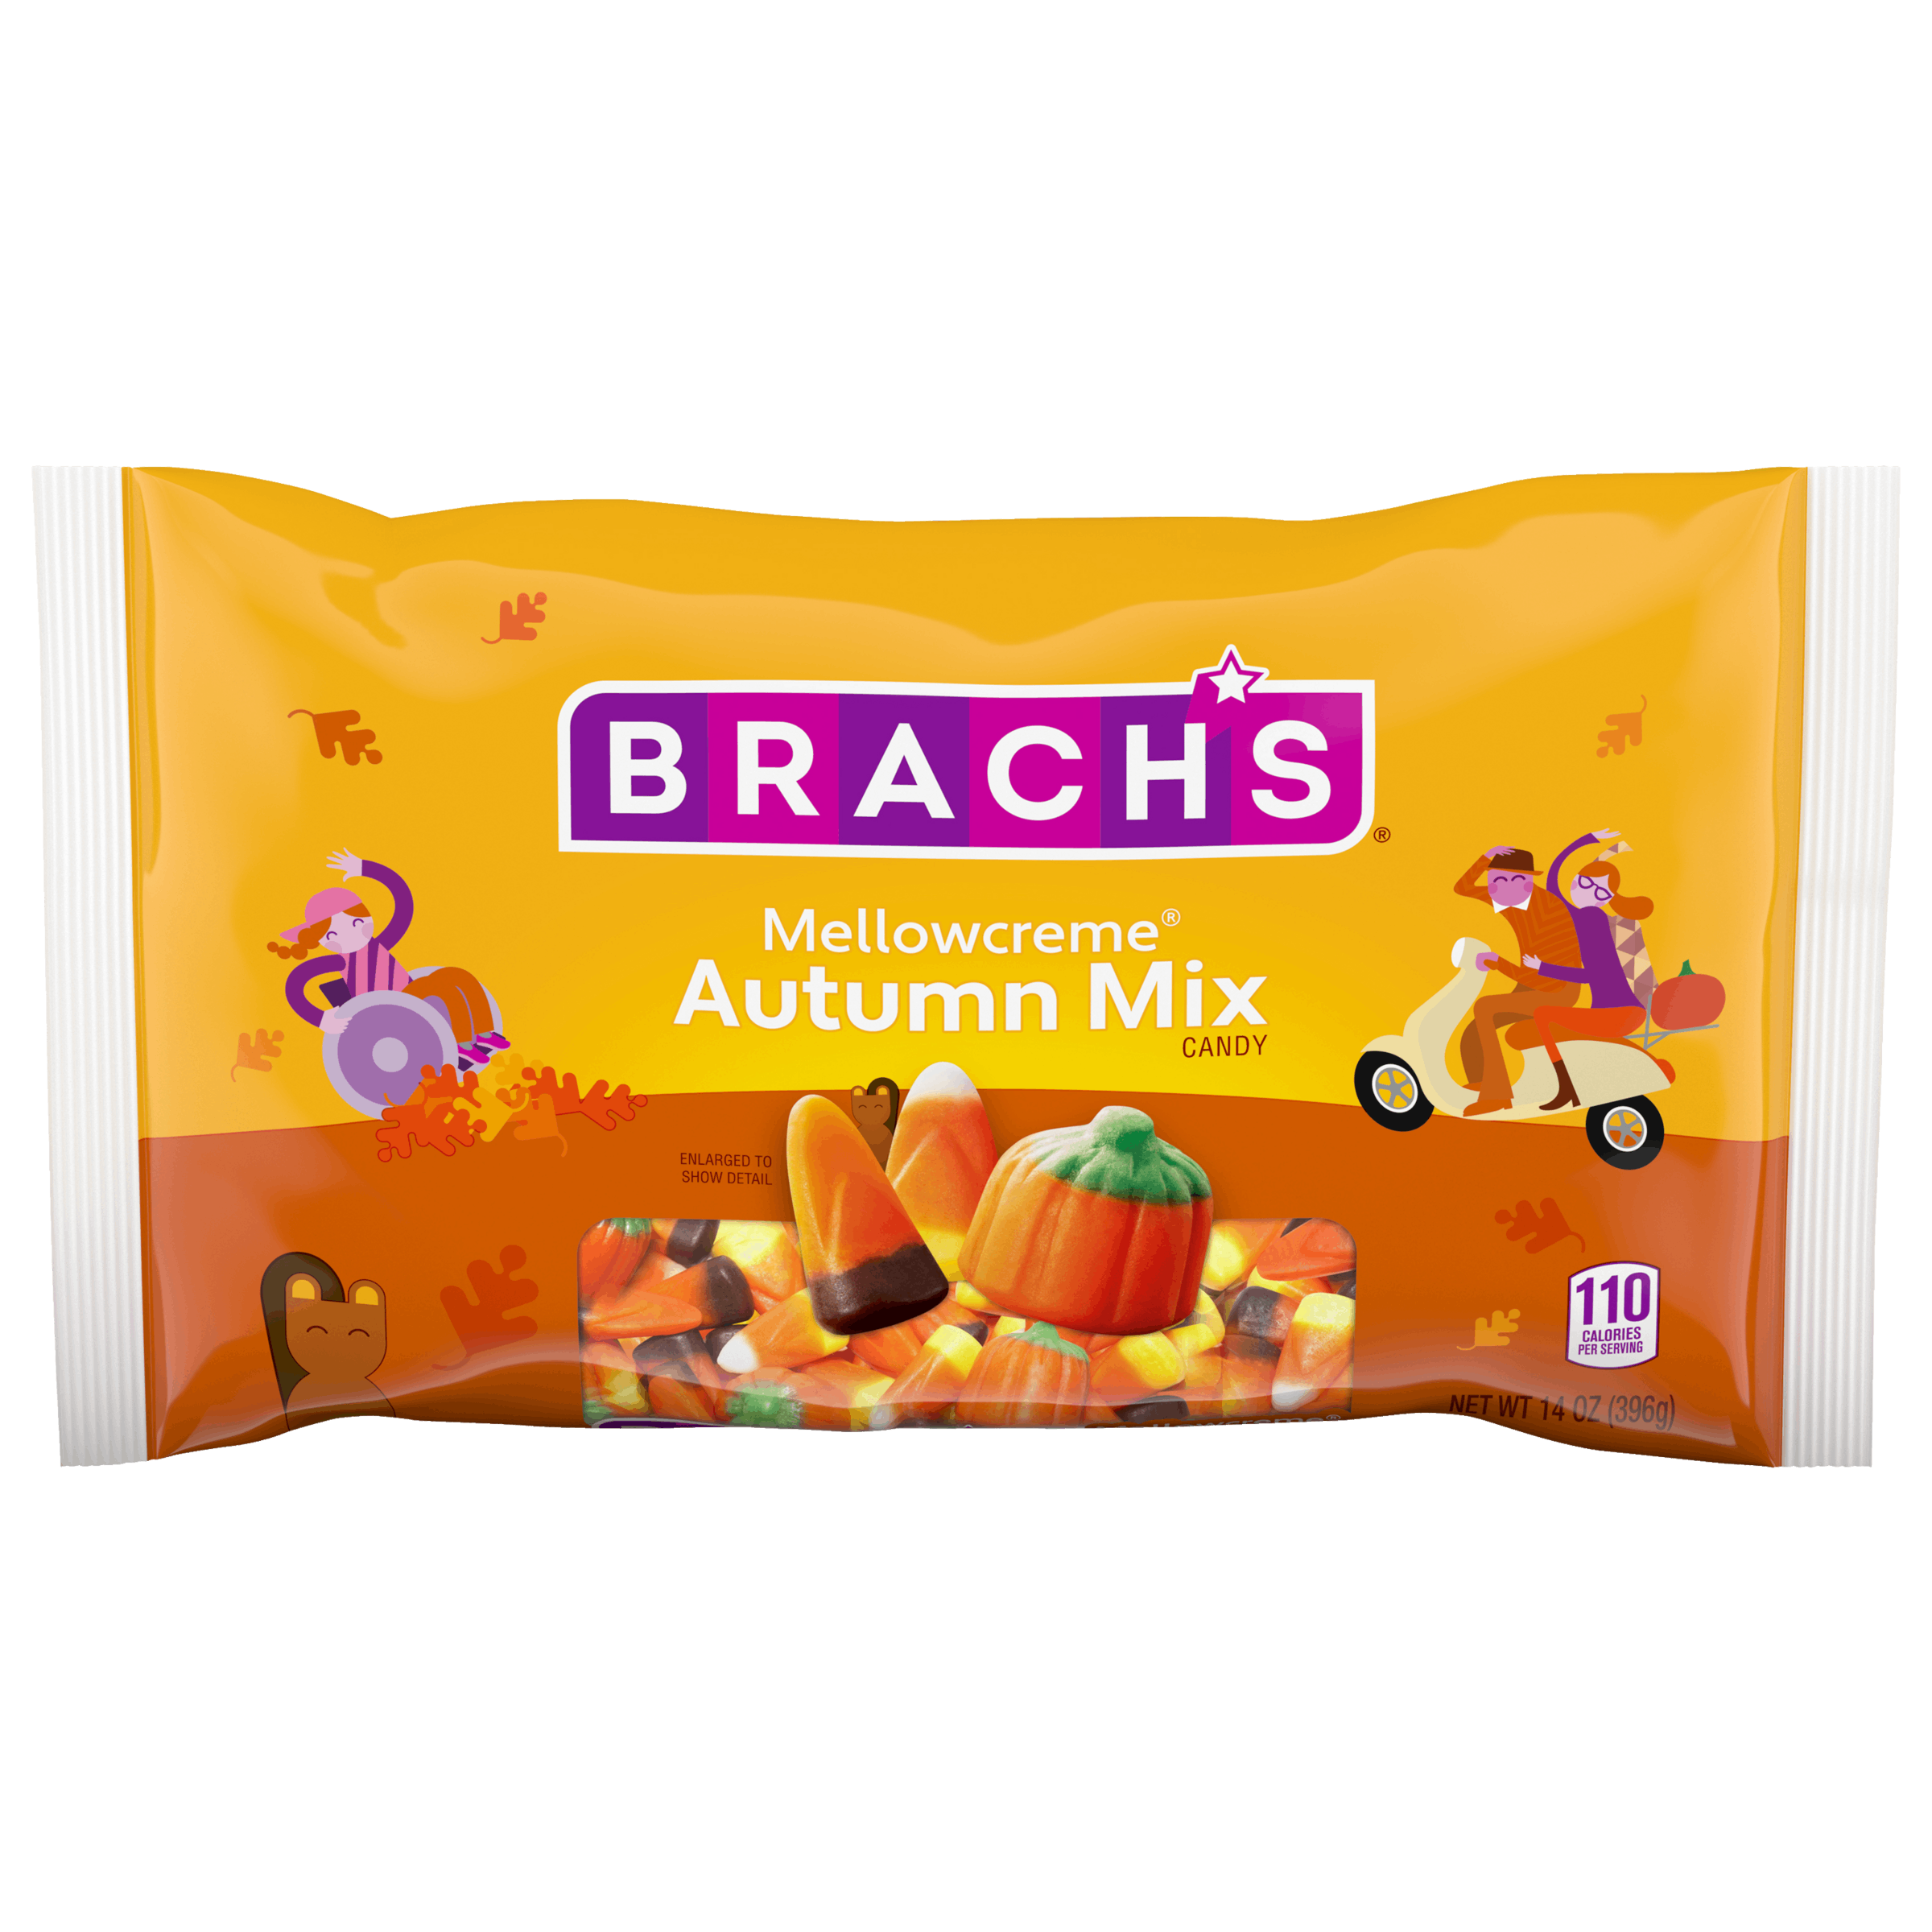 Autumn mix mellowcreme candy